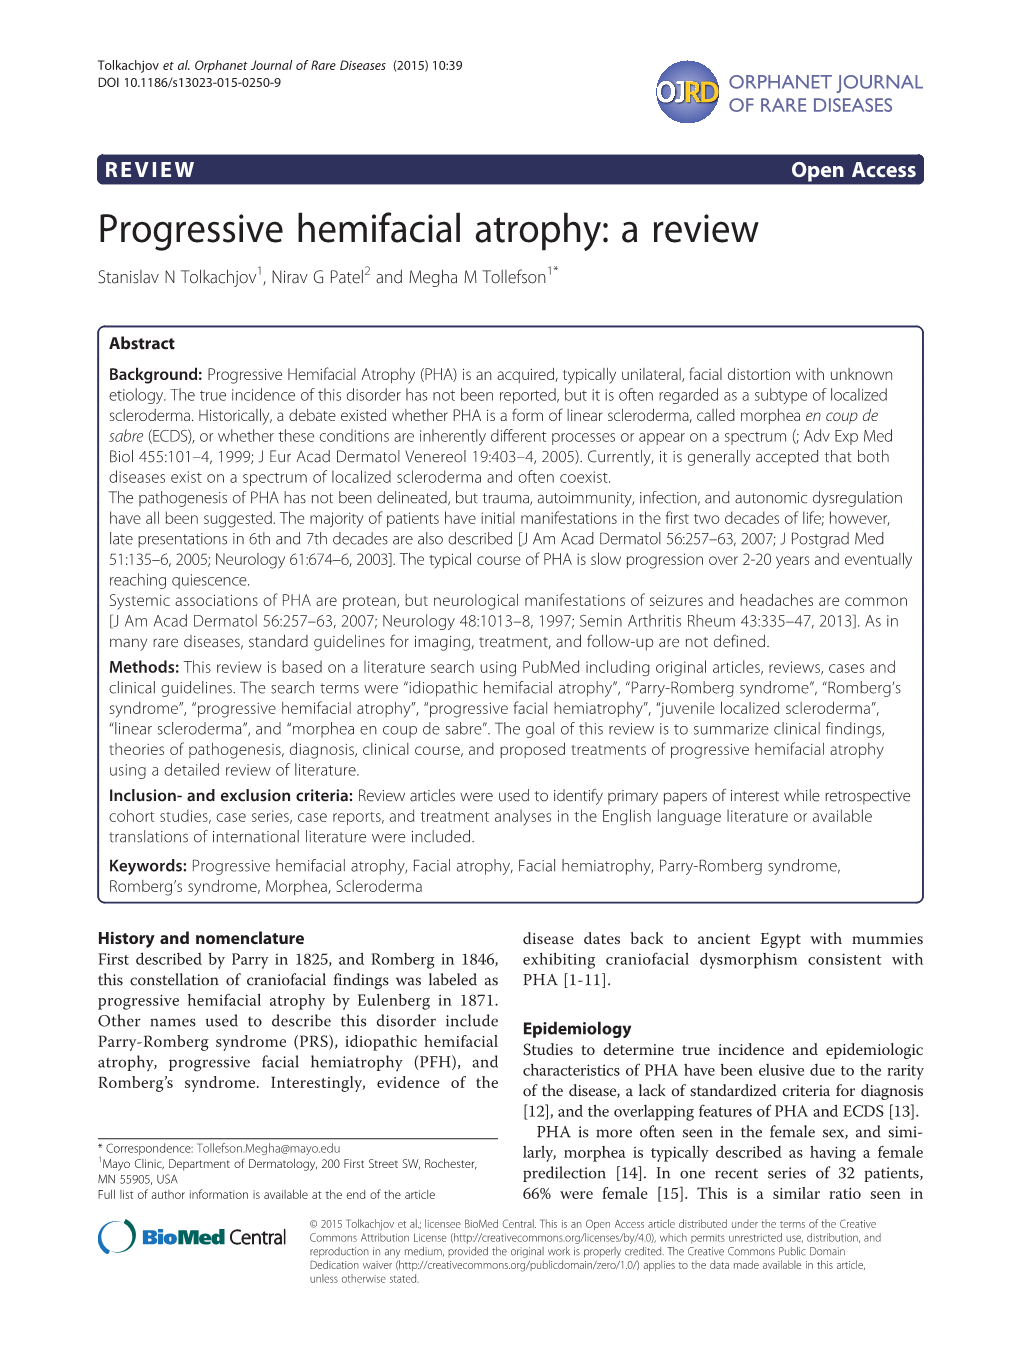 Progressive Hemifacial Atrophy: a Review Stanislav N Tolkachjov1, Nirav G Patel2 and Megha M Tollefson1*